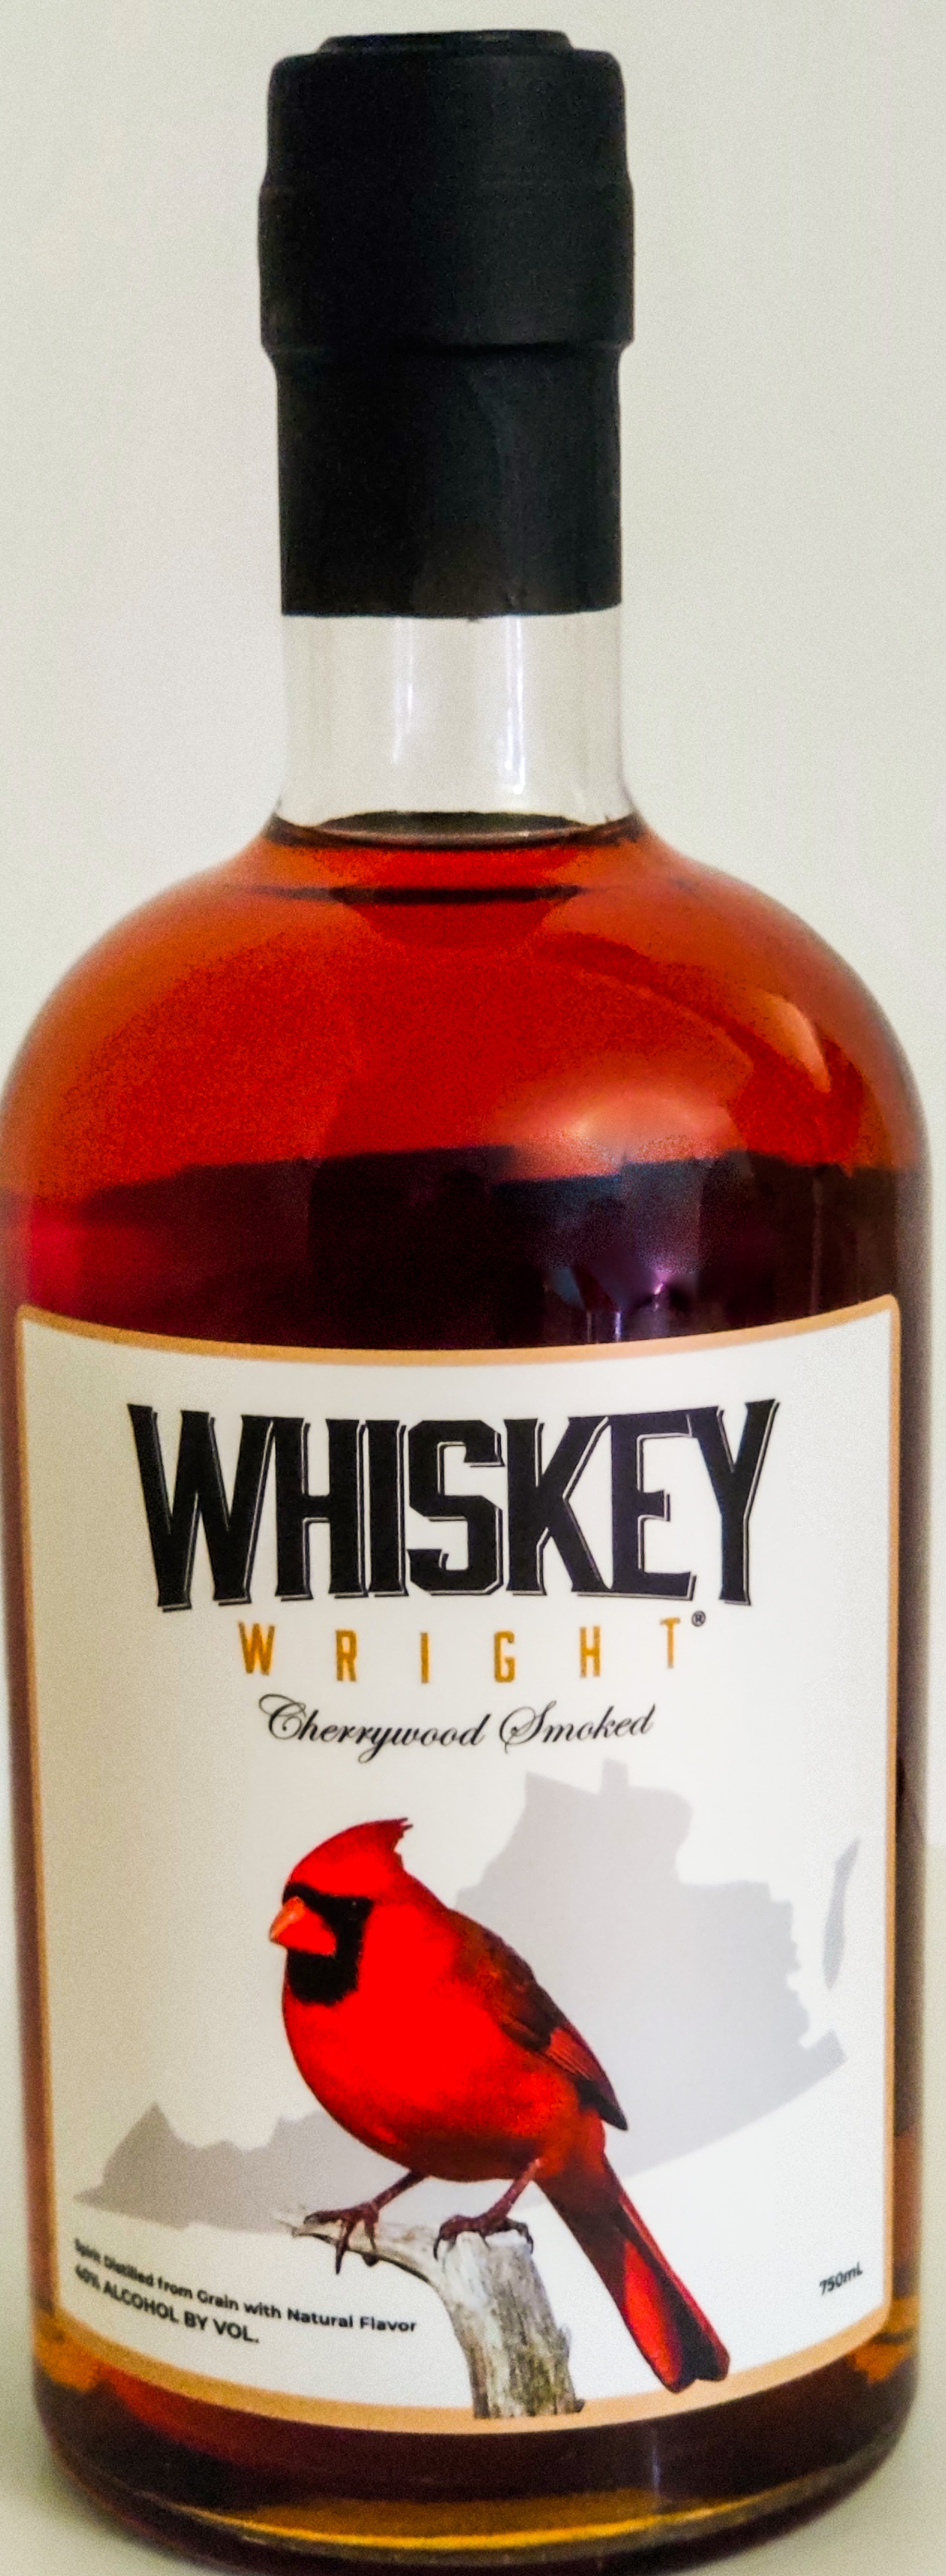 Whiskey Wright Cherrywood